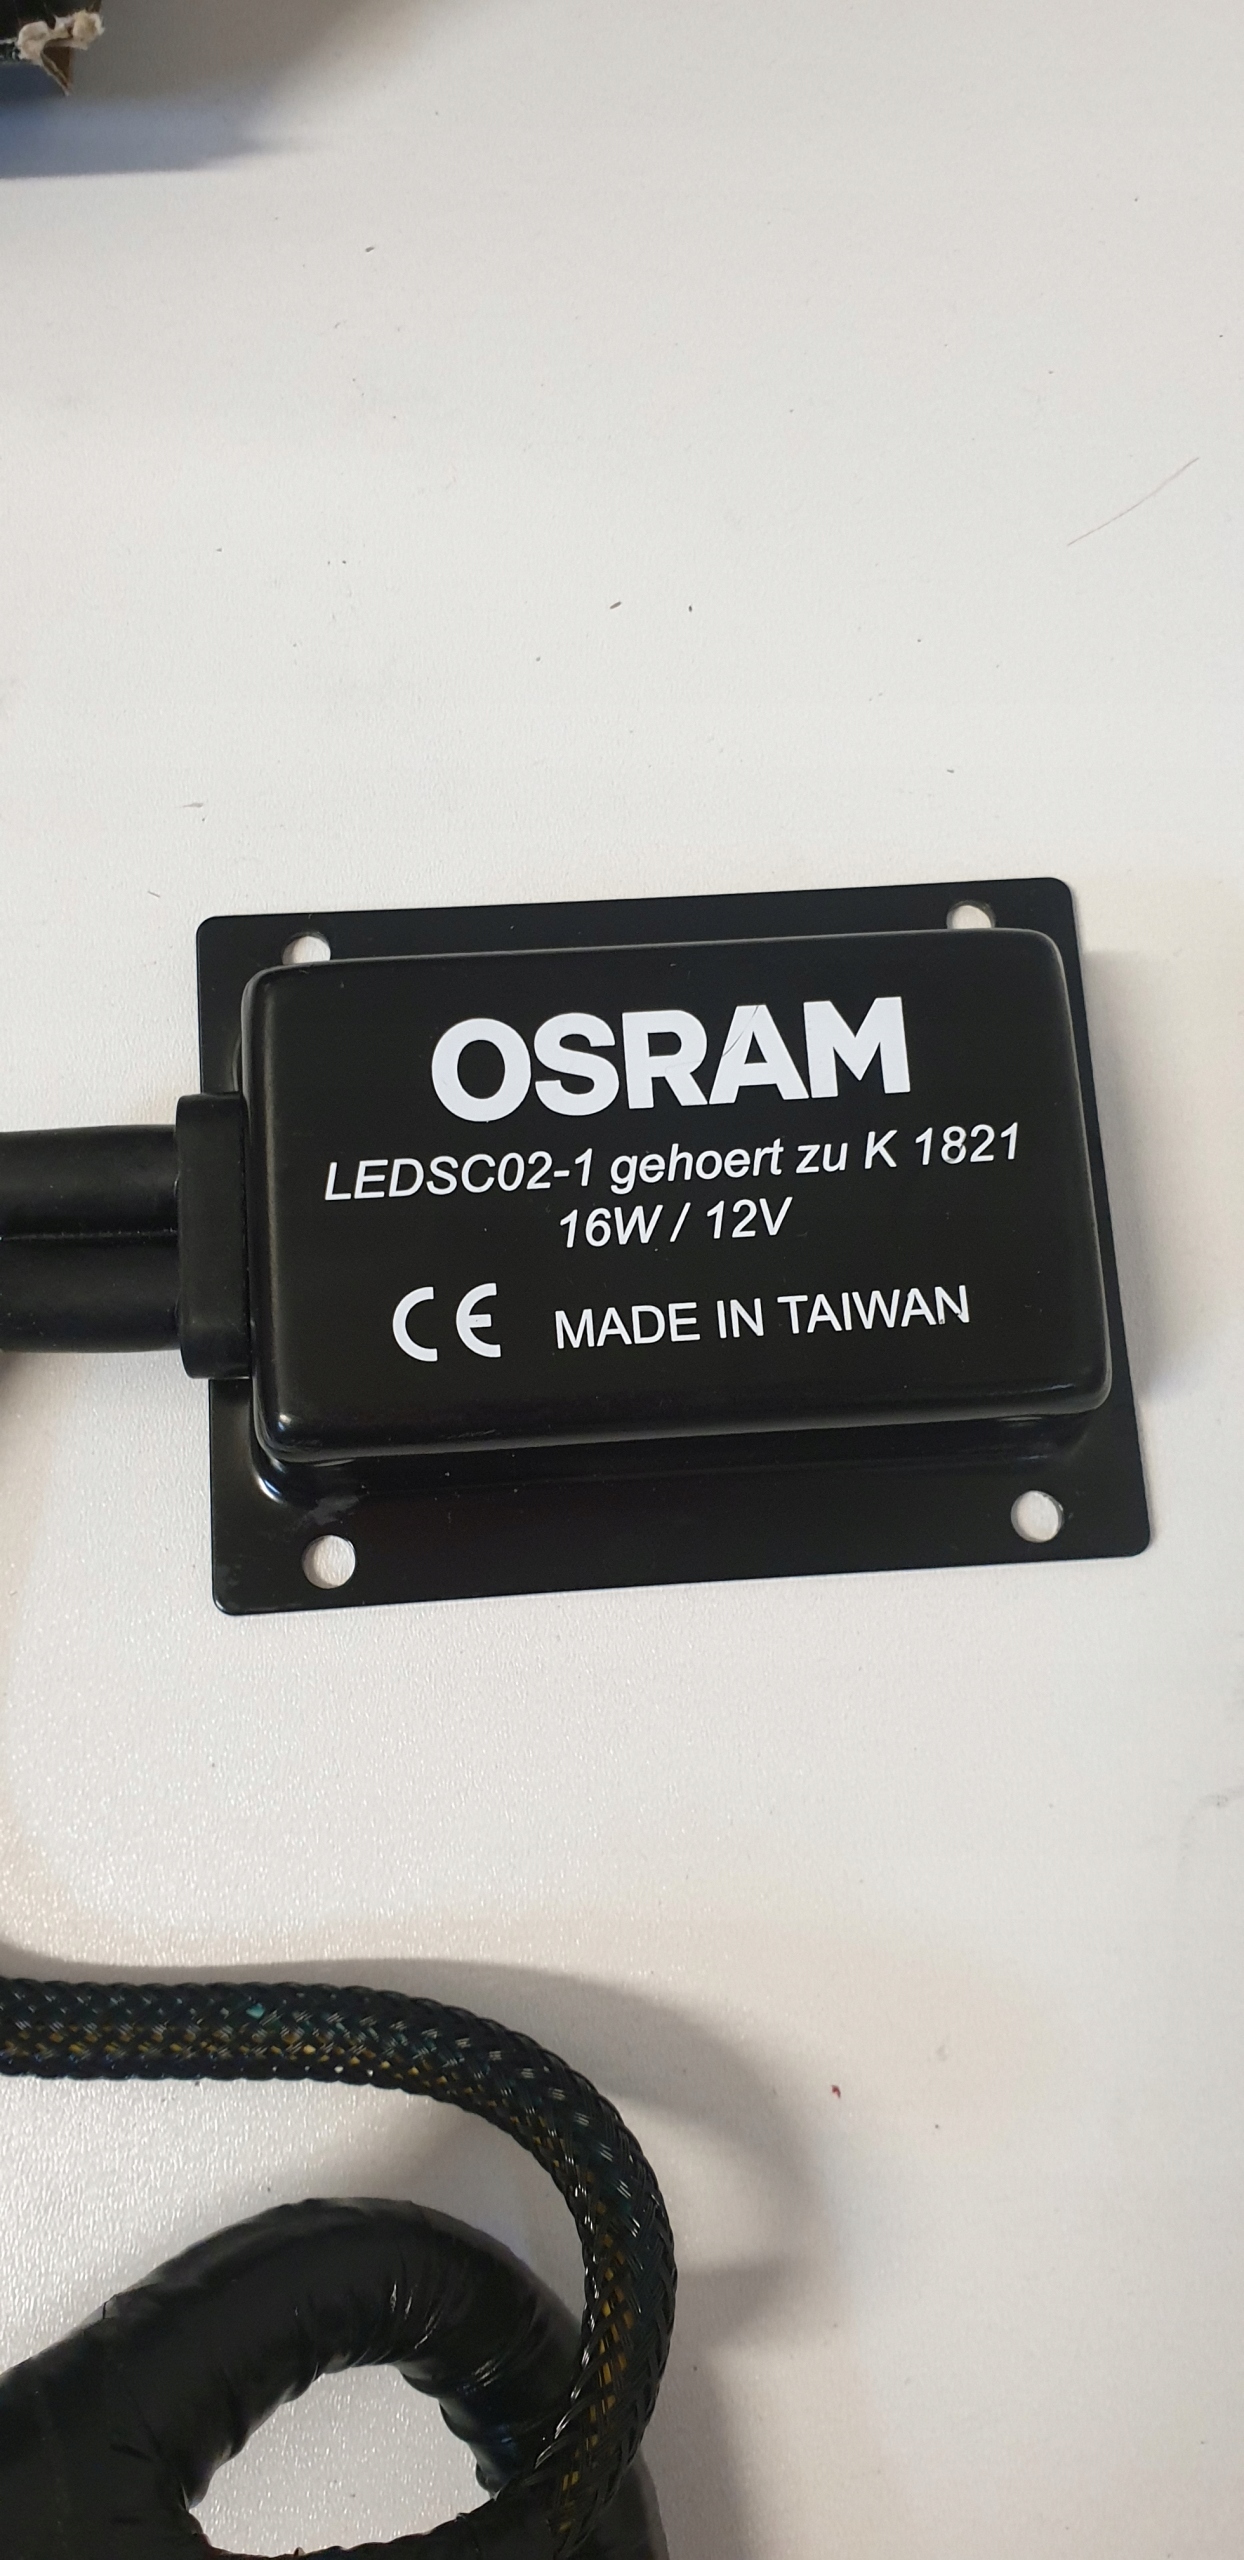 https://a.allegroimg.com/original/1185cf/7201aeb5445189dad2a4e25ccaa3/ADAPTER-LEDRIVING-SMART-CANBUS-OSRAM-LEDSC02-1-Producent-czesci-Osram